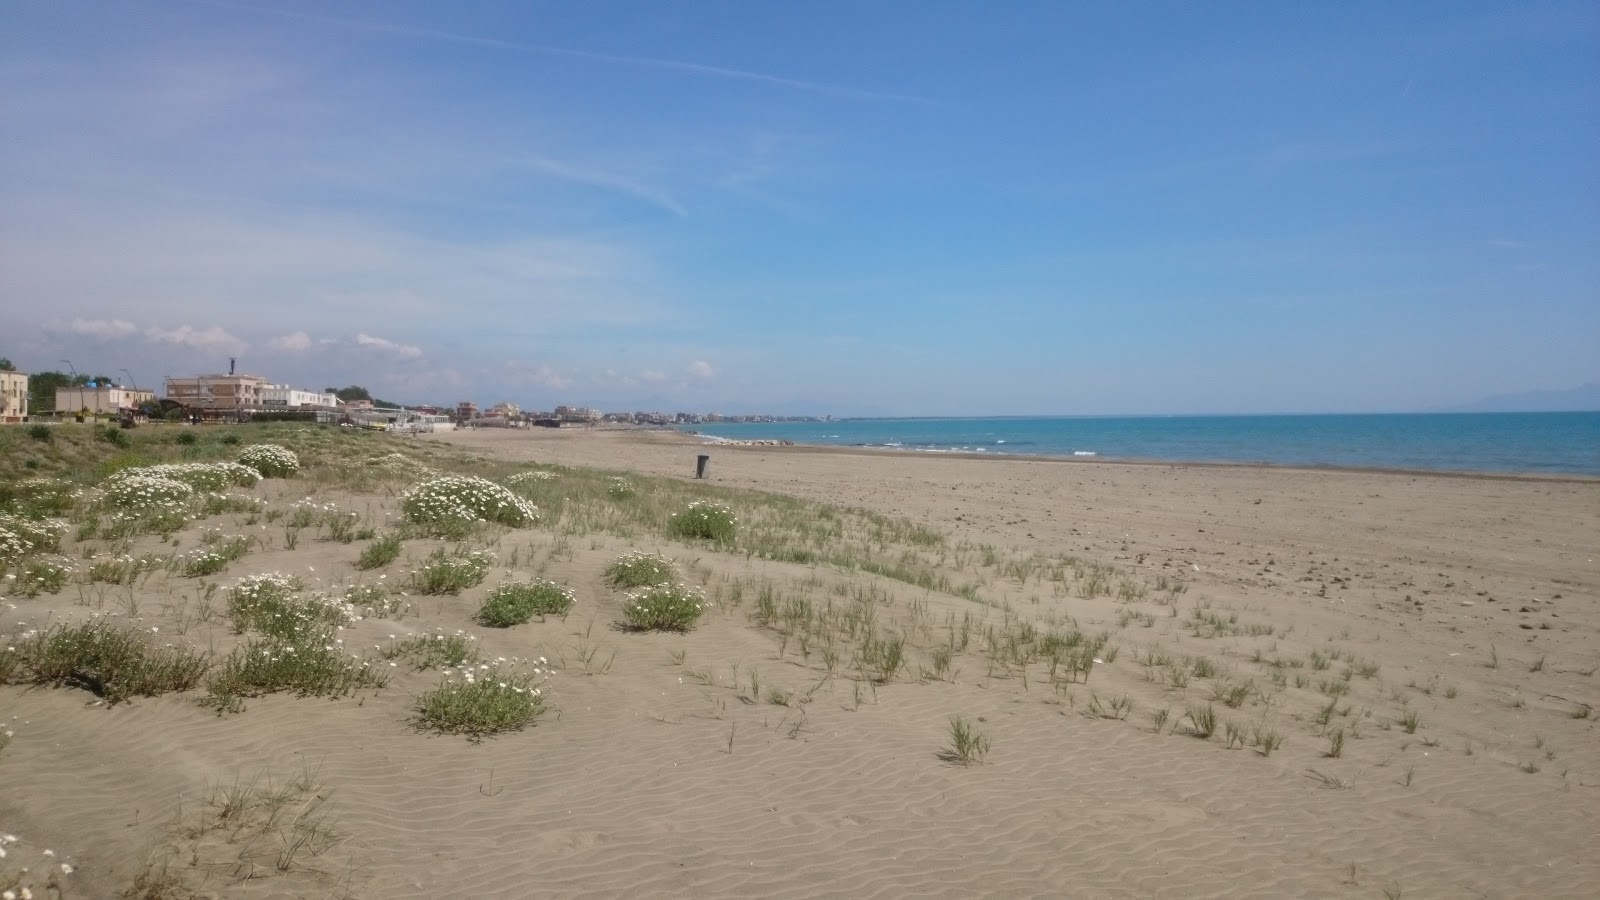 Fotografie cu Spiaggia Attrezzata - locul popular printre cunoscătorii de relaxare